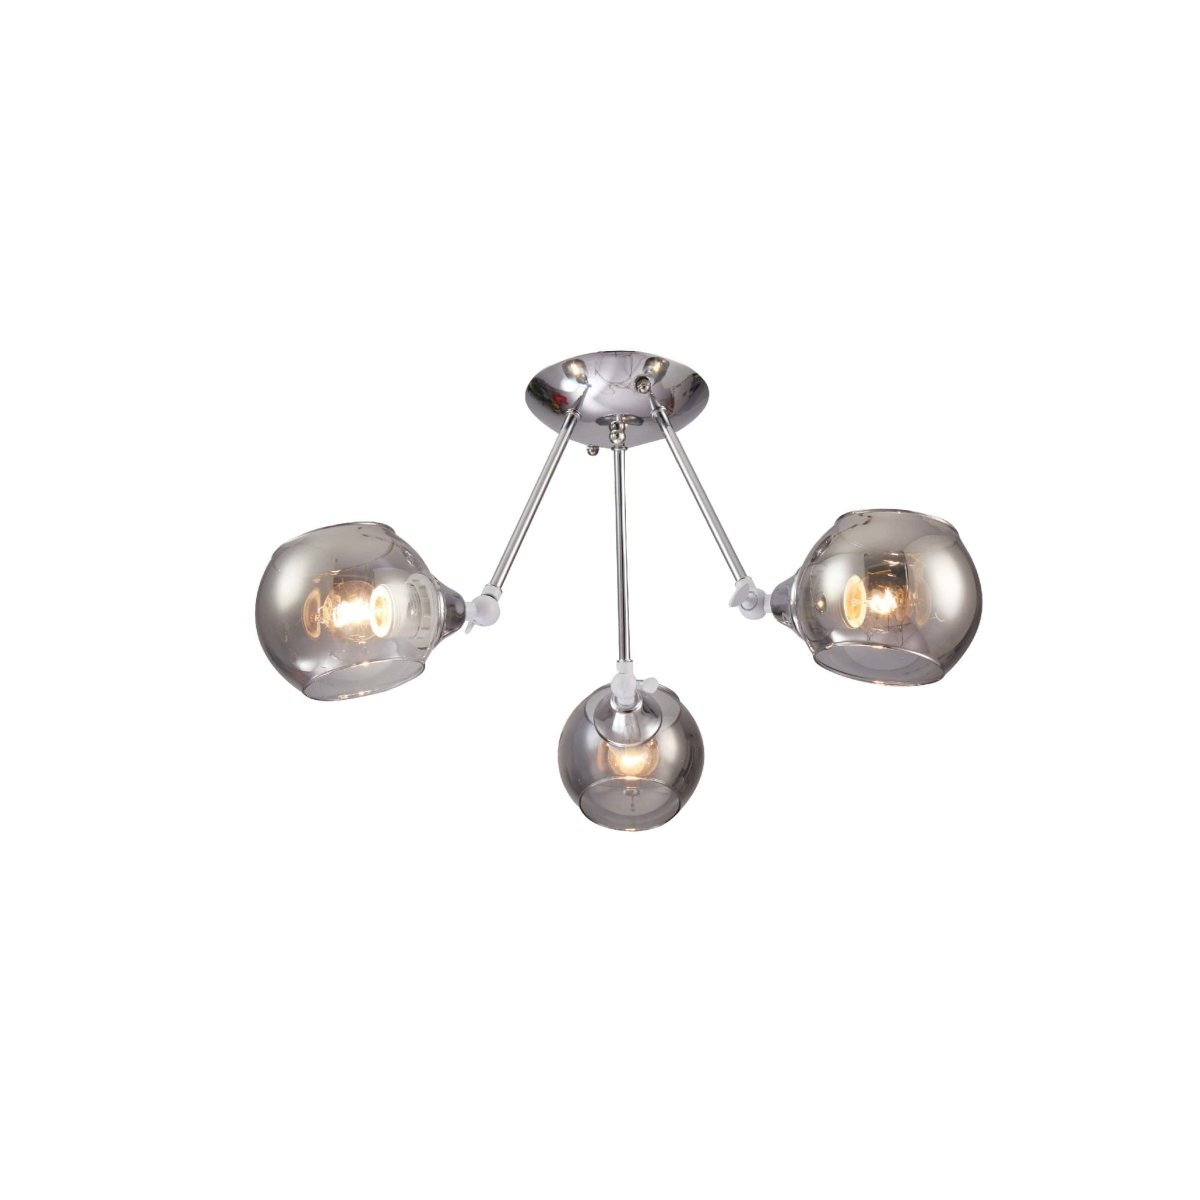 Main image of Smoky Cut-out Globe Glass Hinged Chrome Metal Semi Flush Ceiling Light | TEKLED 159-17584